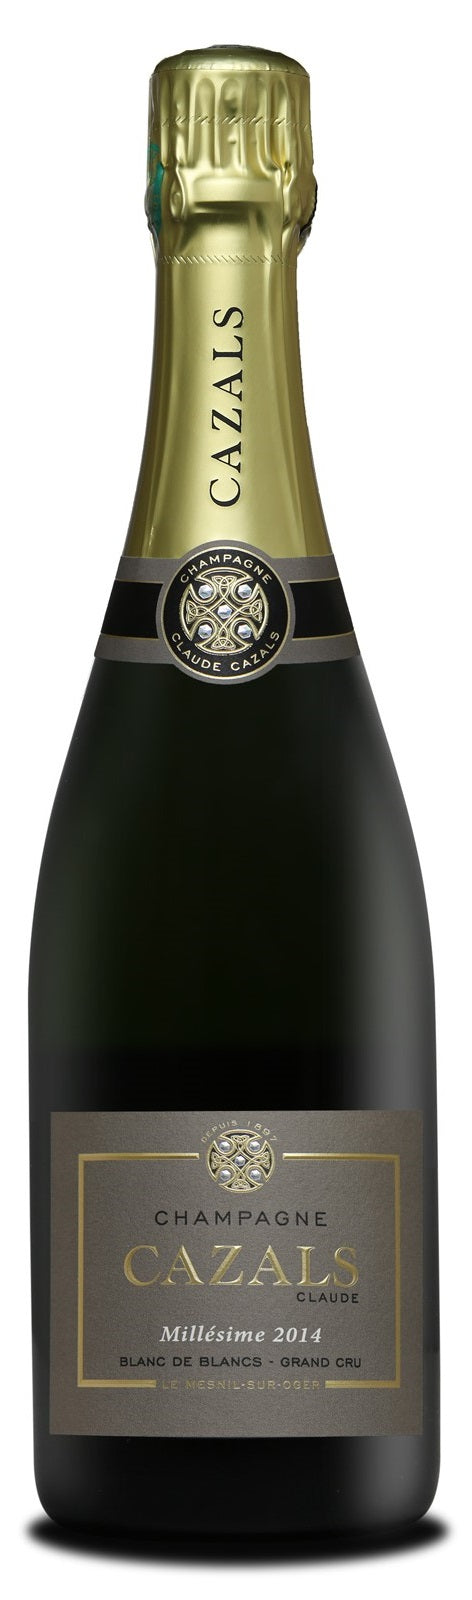 Champagne Claude Cazals Millesime 2014